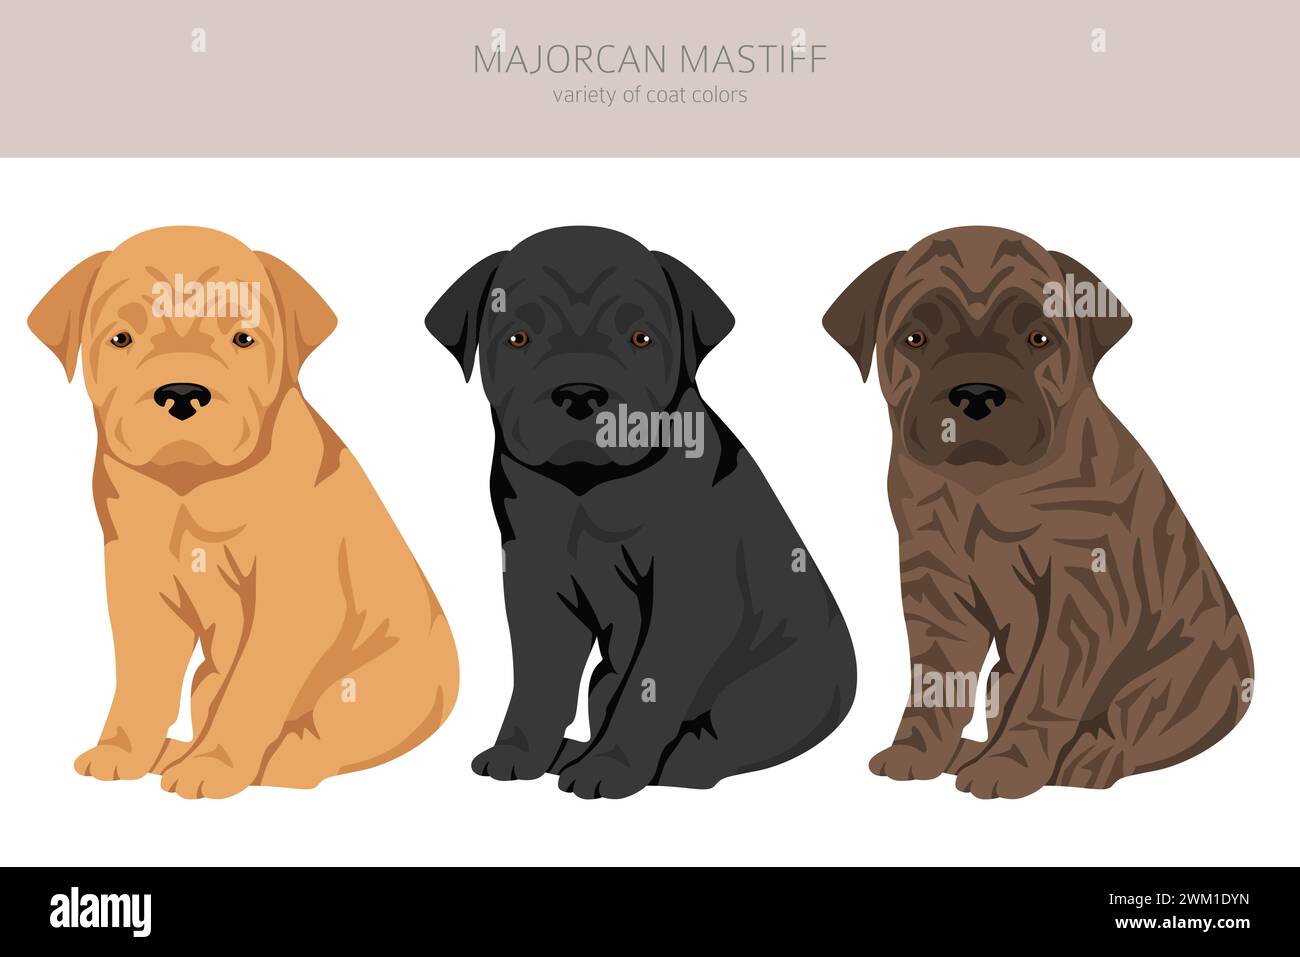 Mallorquinische Mastiff Welpen Clipart. Alle Lackfarben festgelegt. Infografik zu den Merkmalen aller Hunderassen. Vektorabbildung Stock Vektor